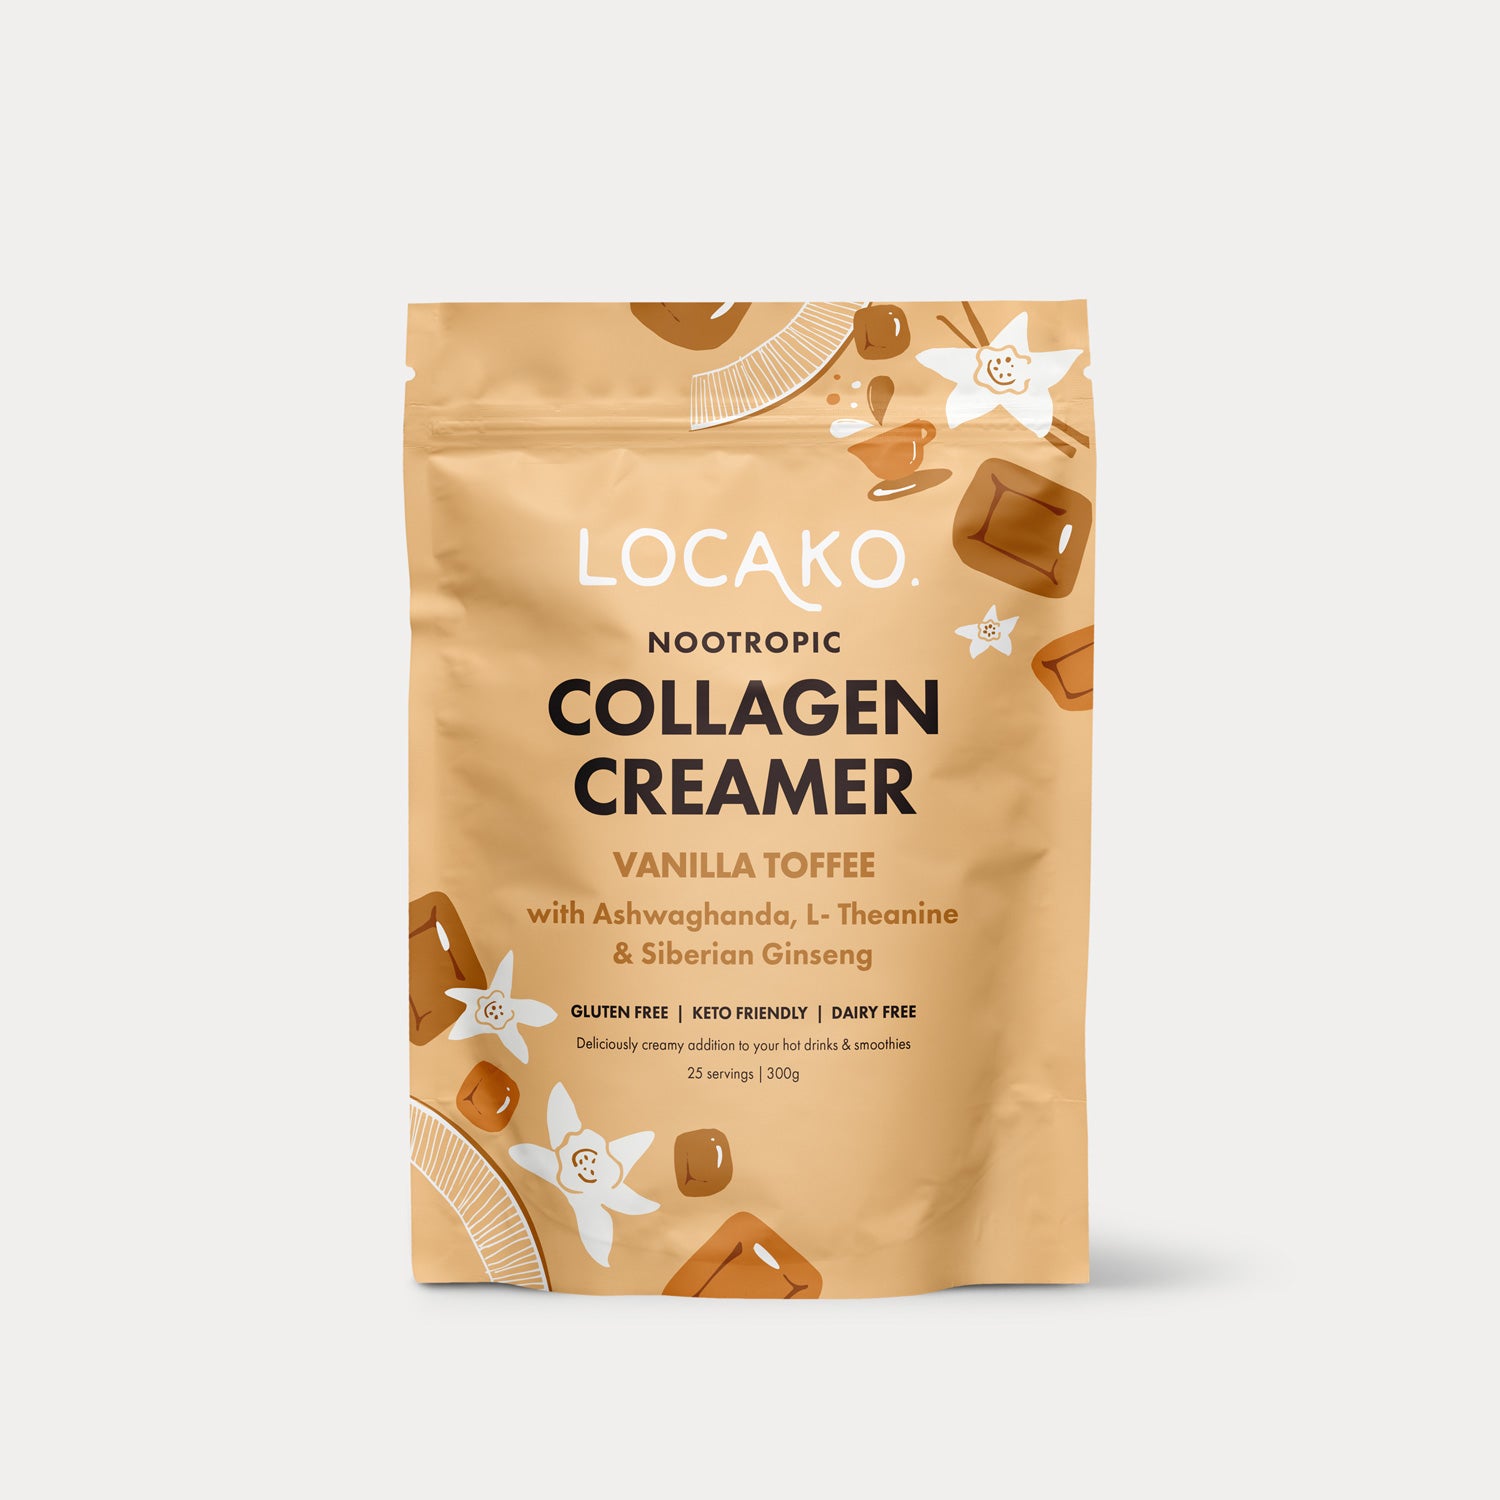 Collagen Creamer - Nootropic - Vanilla Toffee - Locako